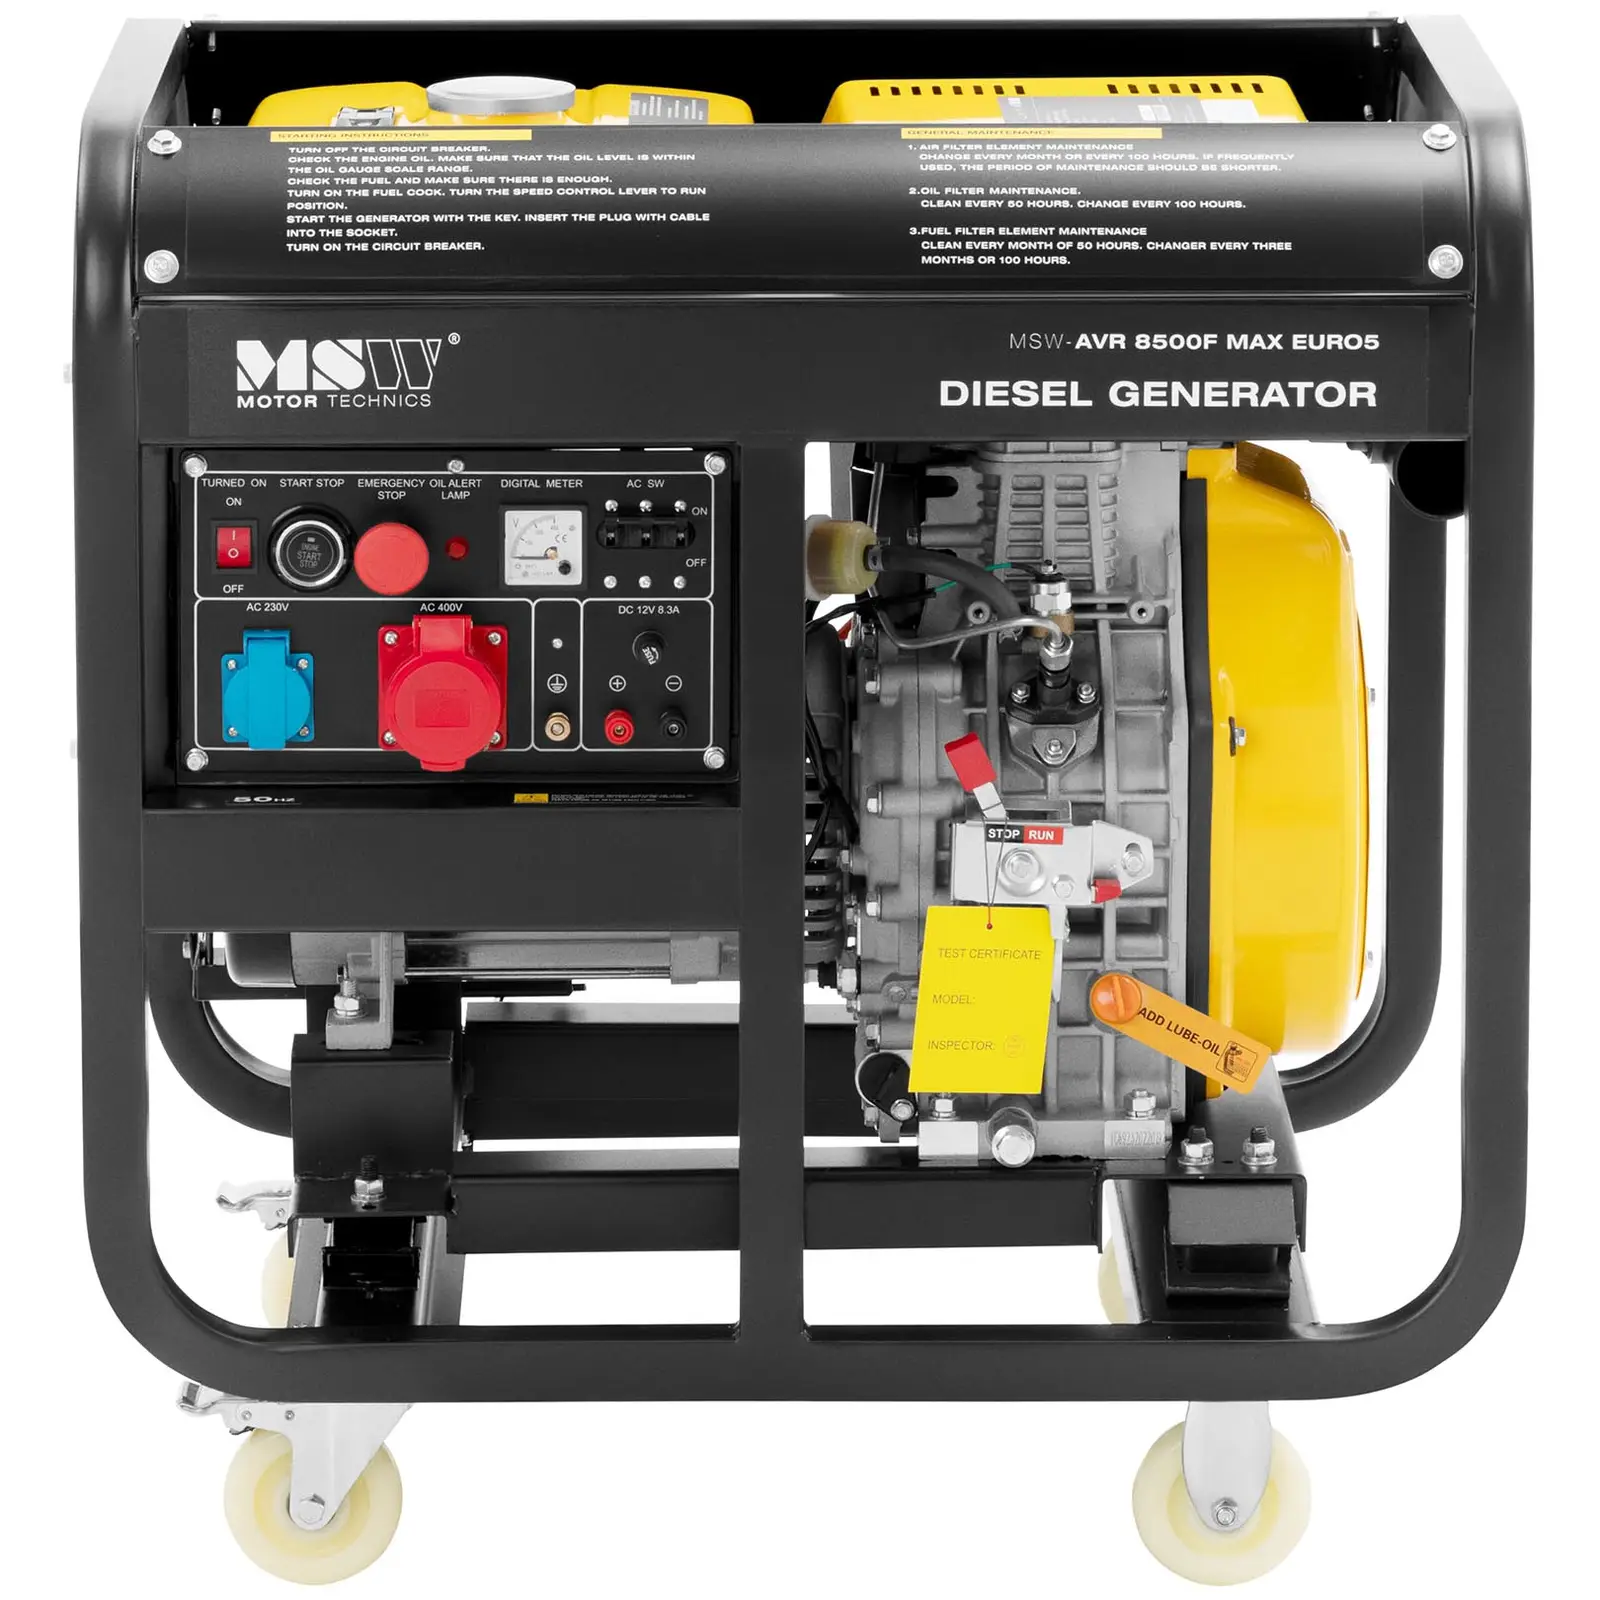 Brugt Dieselgenerator - 2830/8500 W - 30 l - 240/400 V - mobil - AVR - Euro 5